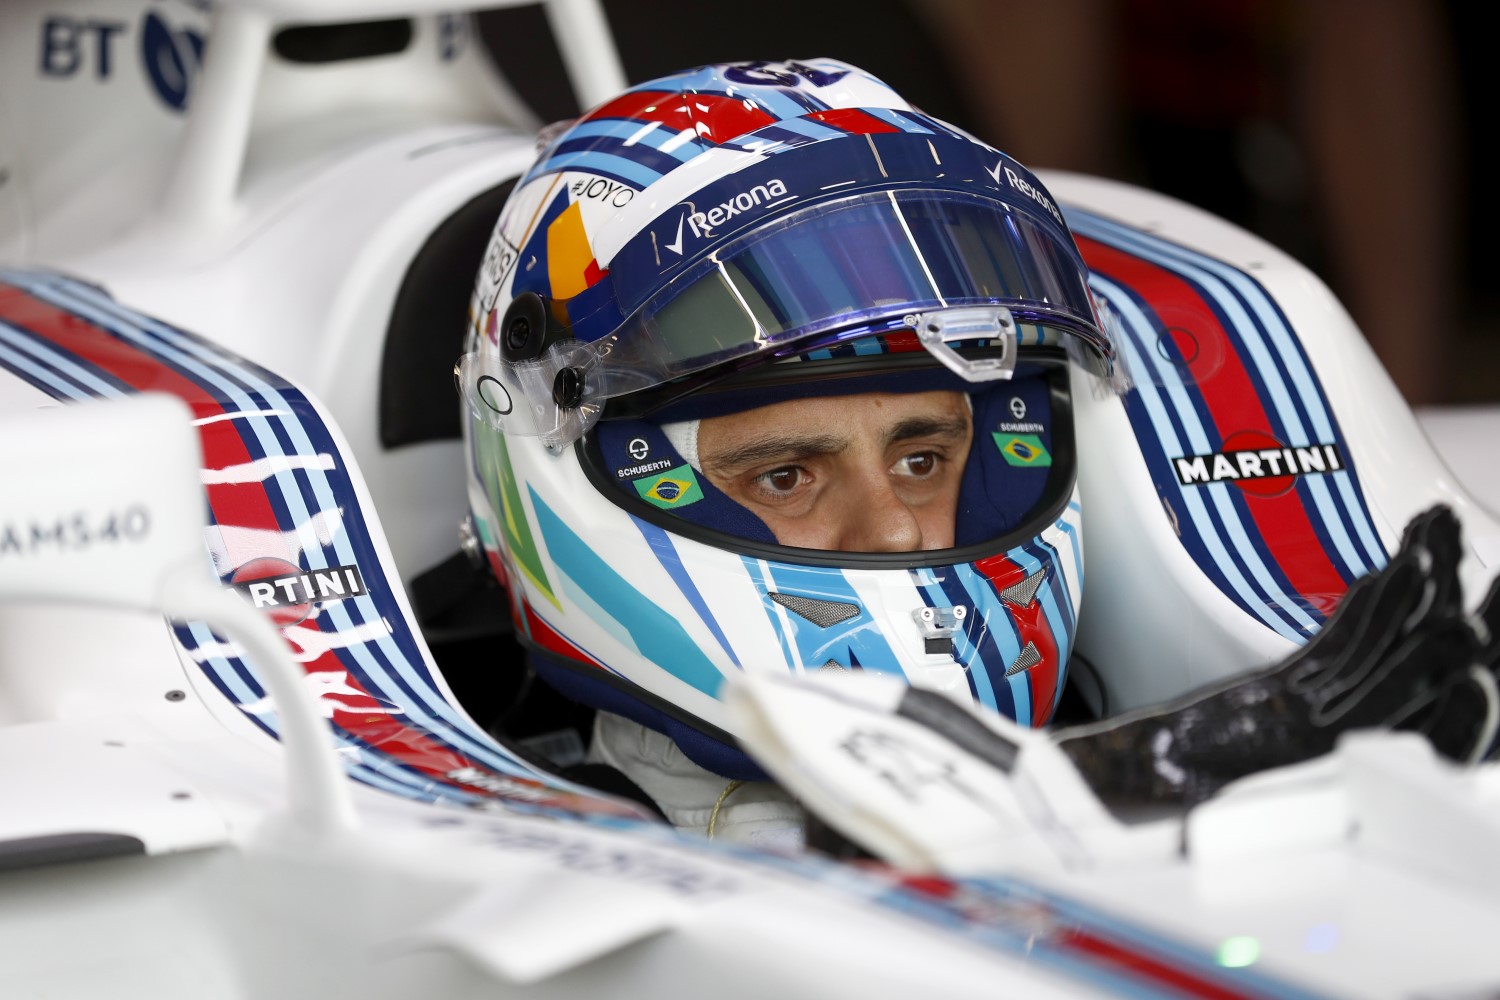 Felipe Massa came back strong at Spa